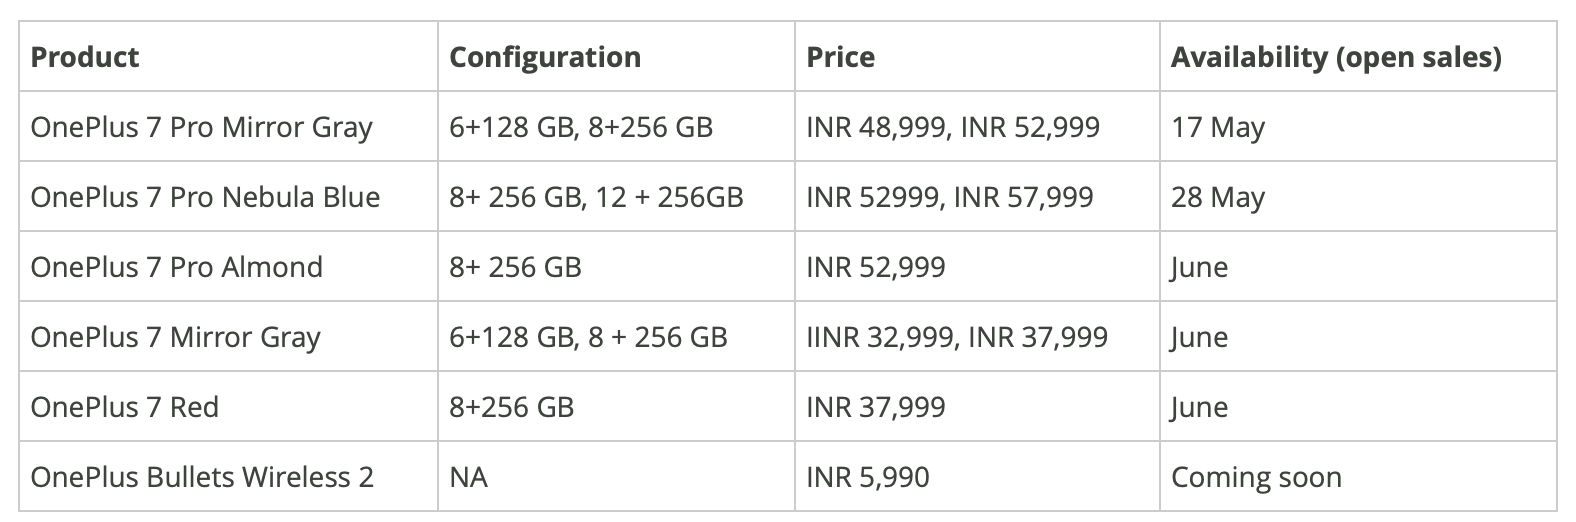 OnePlus 7, OnePlus 7 Pro availability